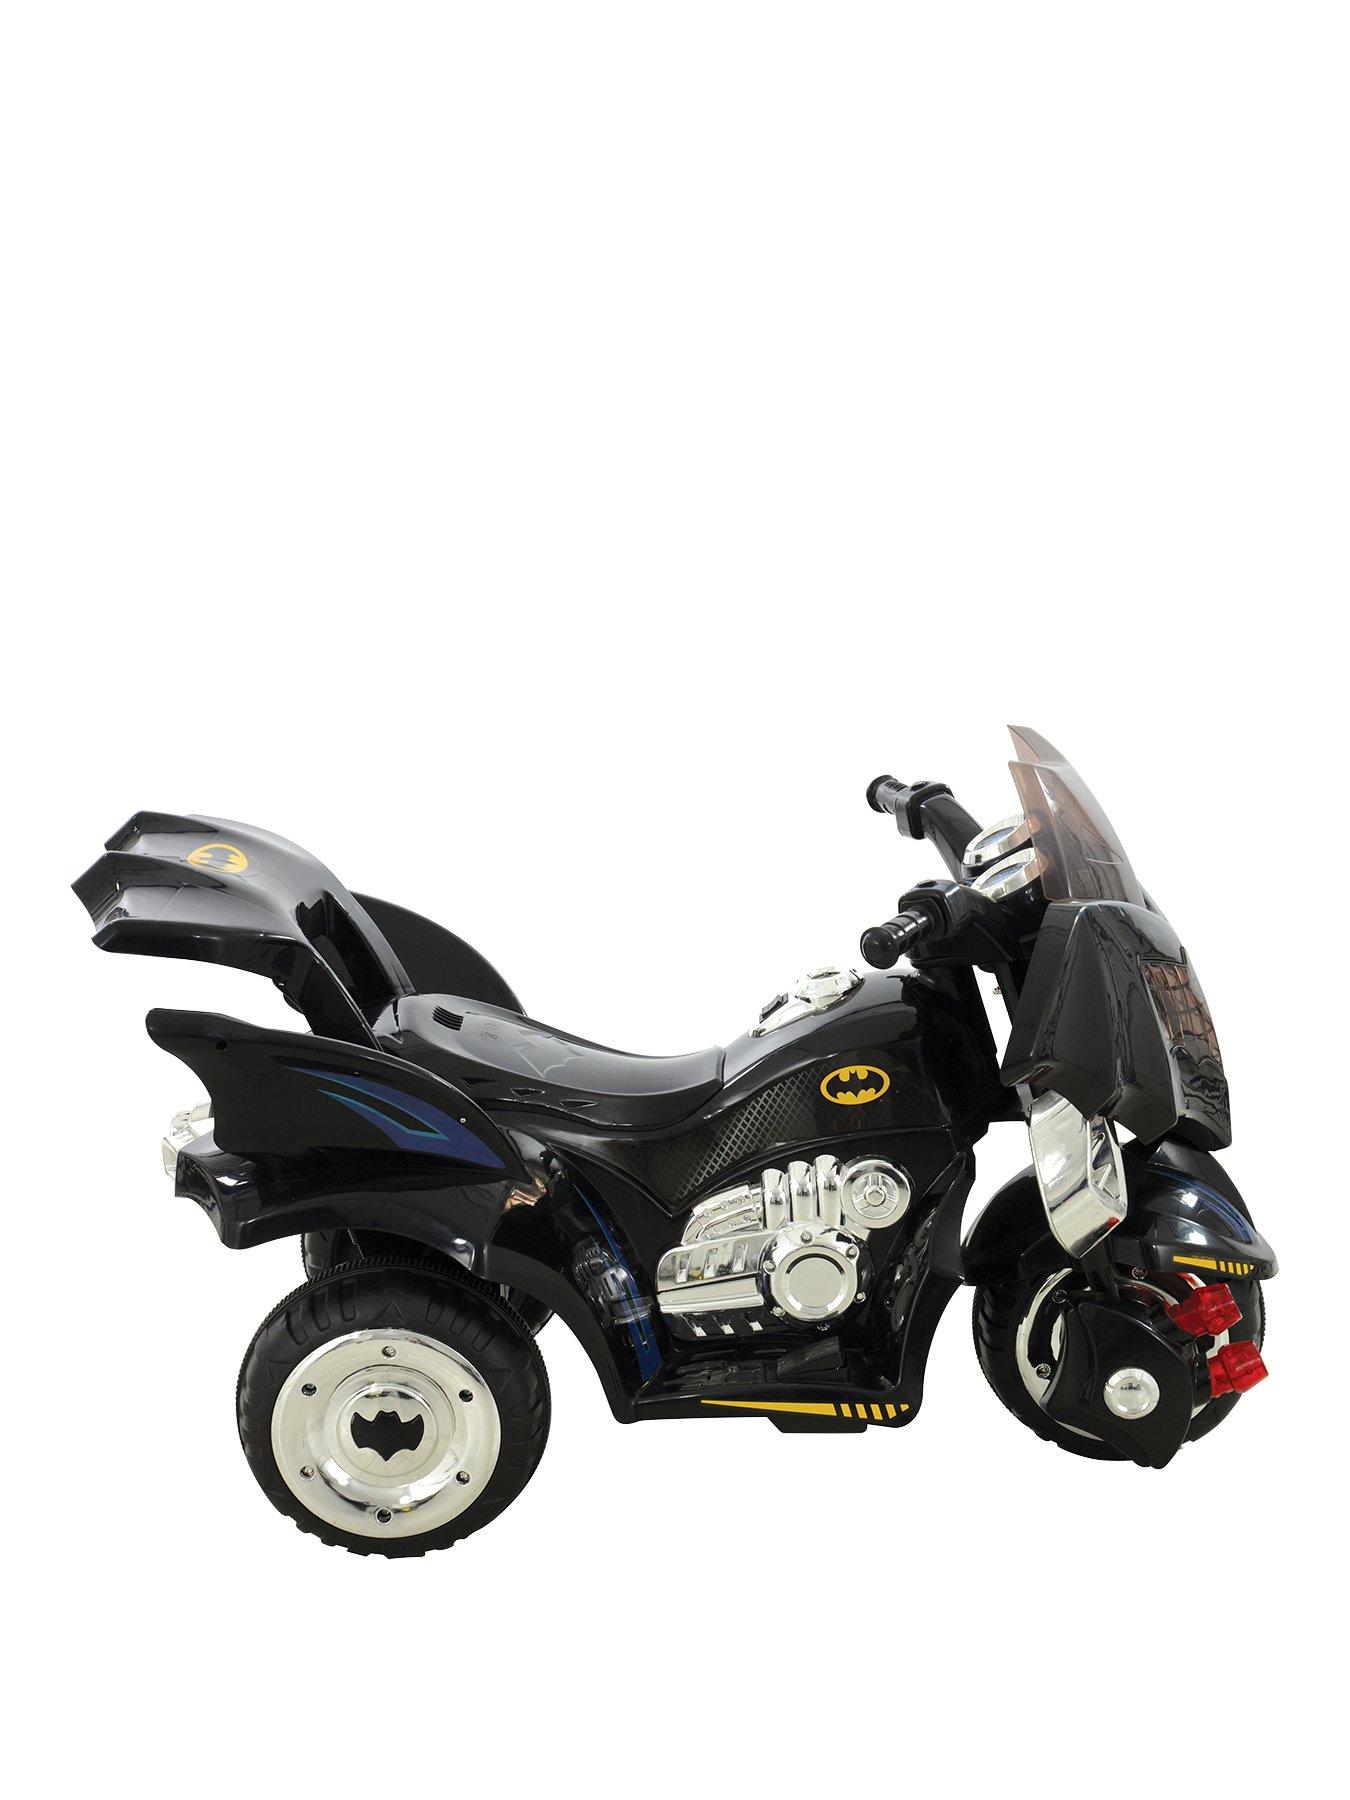 batman bike toy